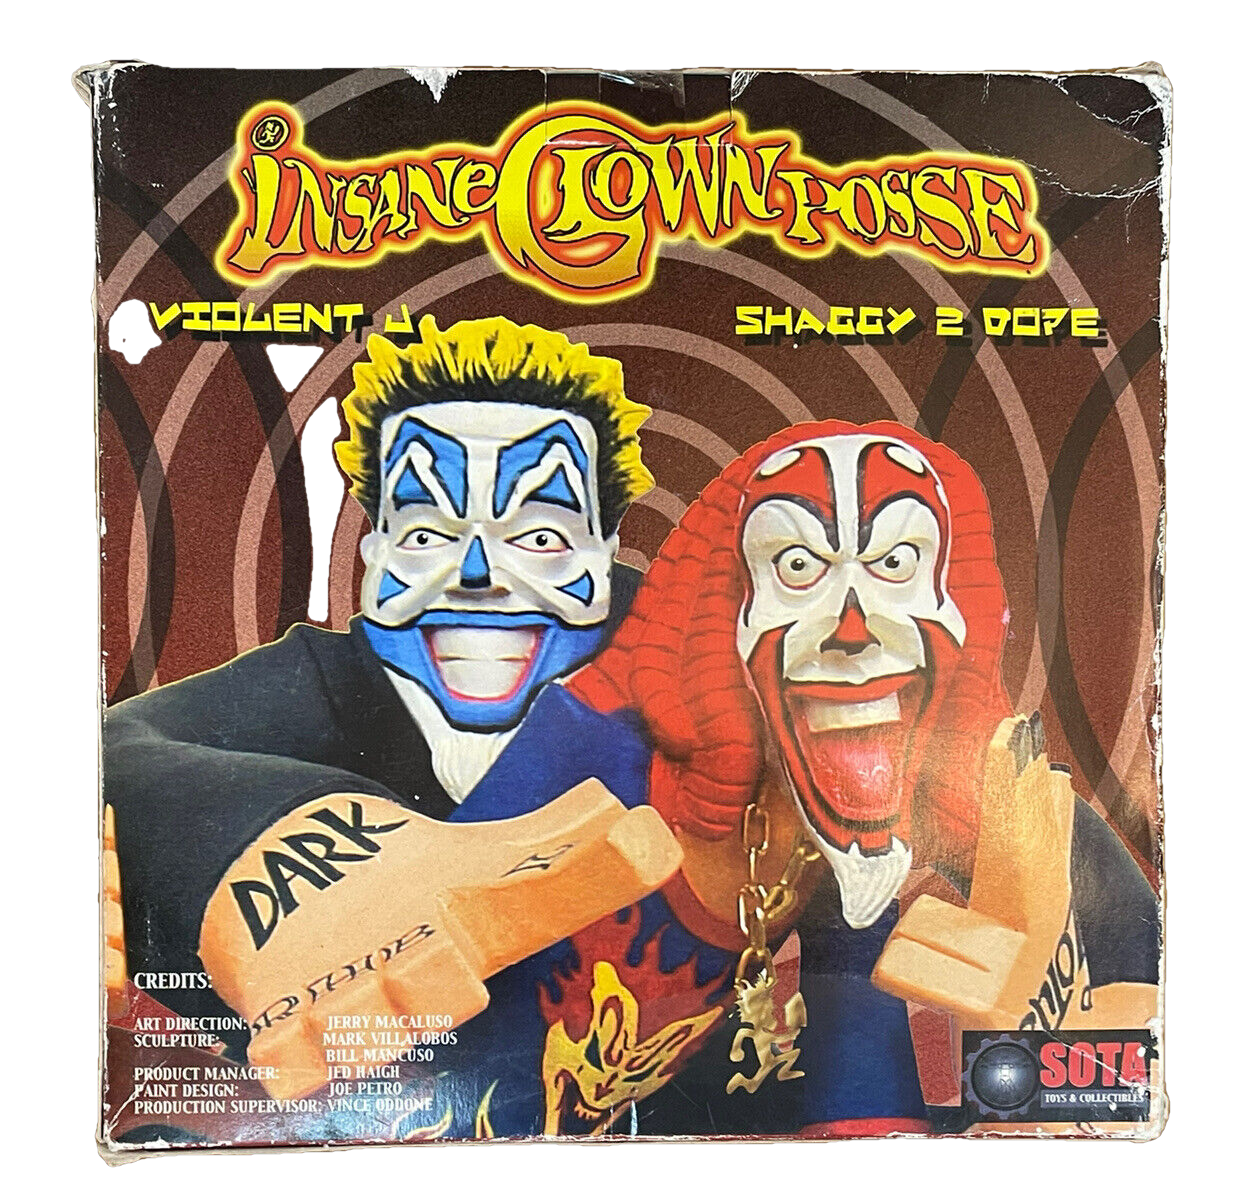 2003 SOTA Toys Insane Clown Posse Shaggy 2 Dope